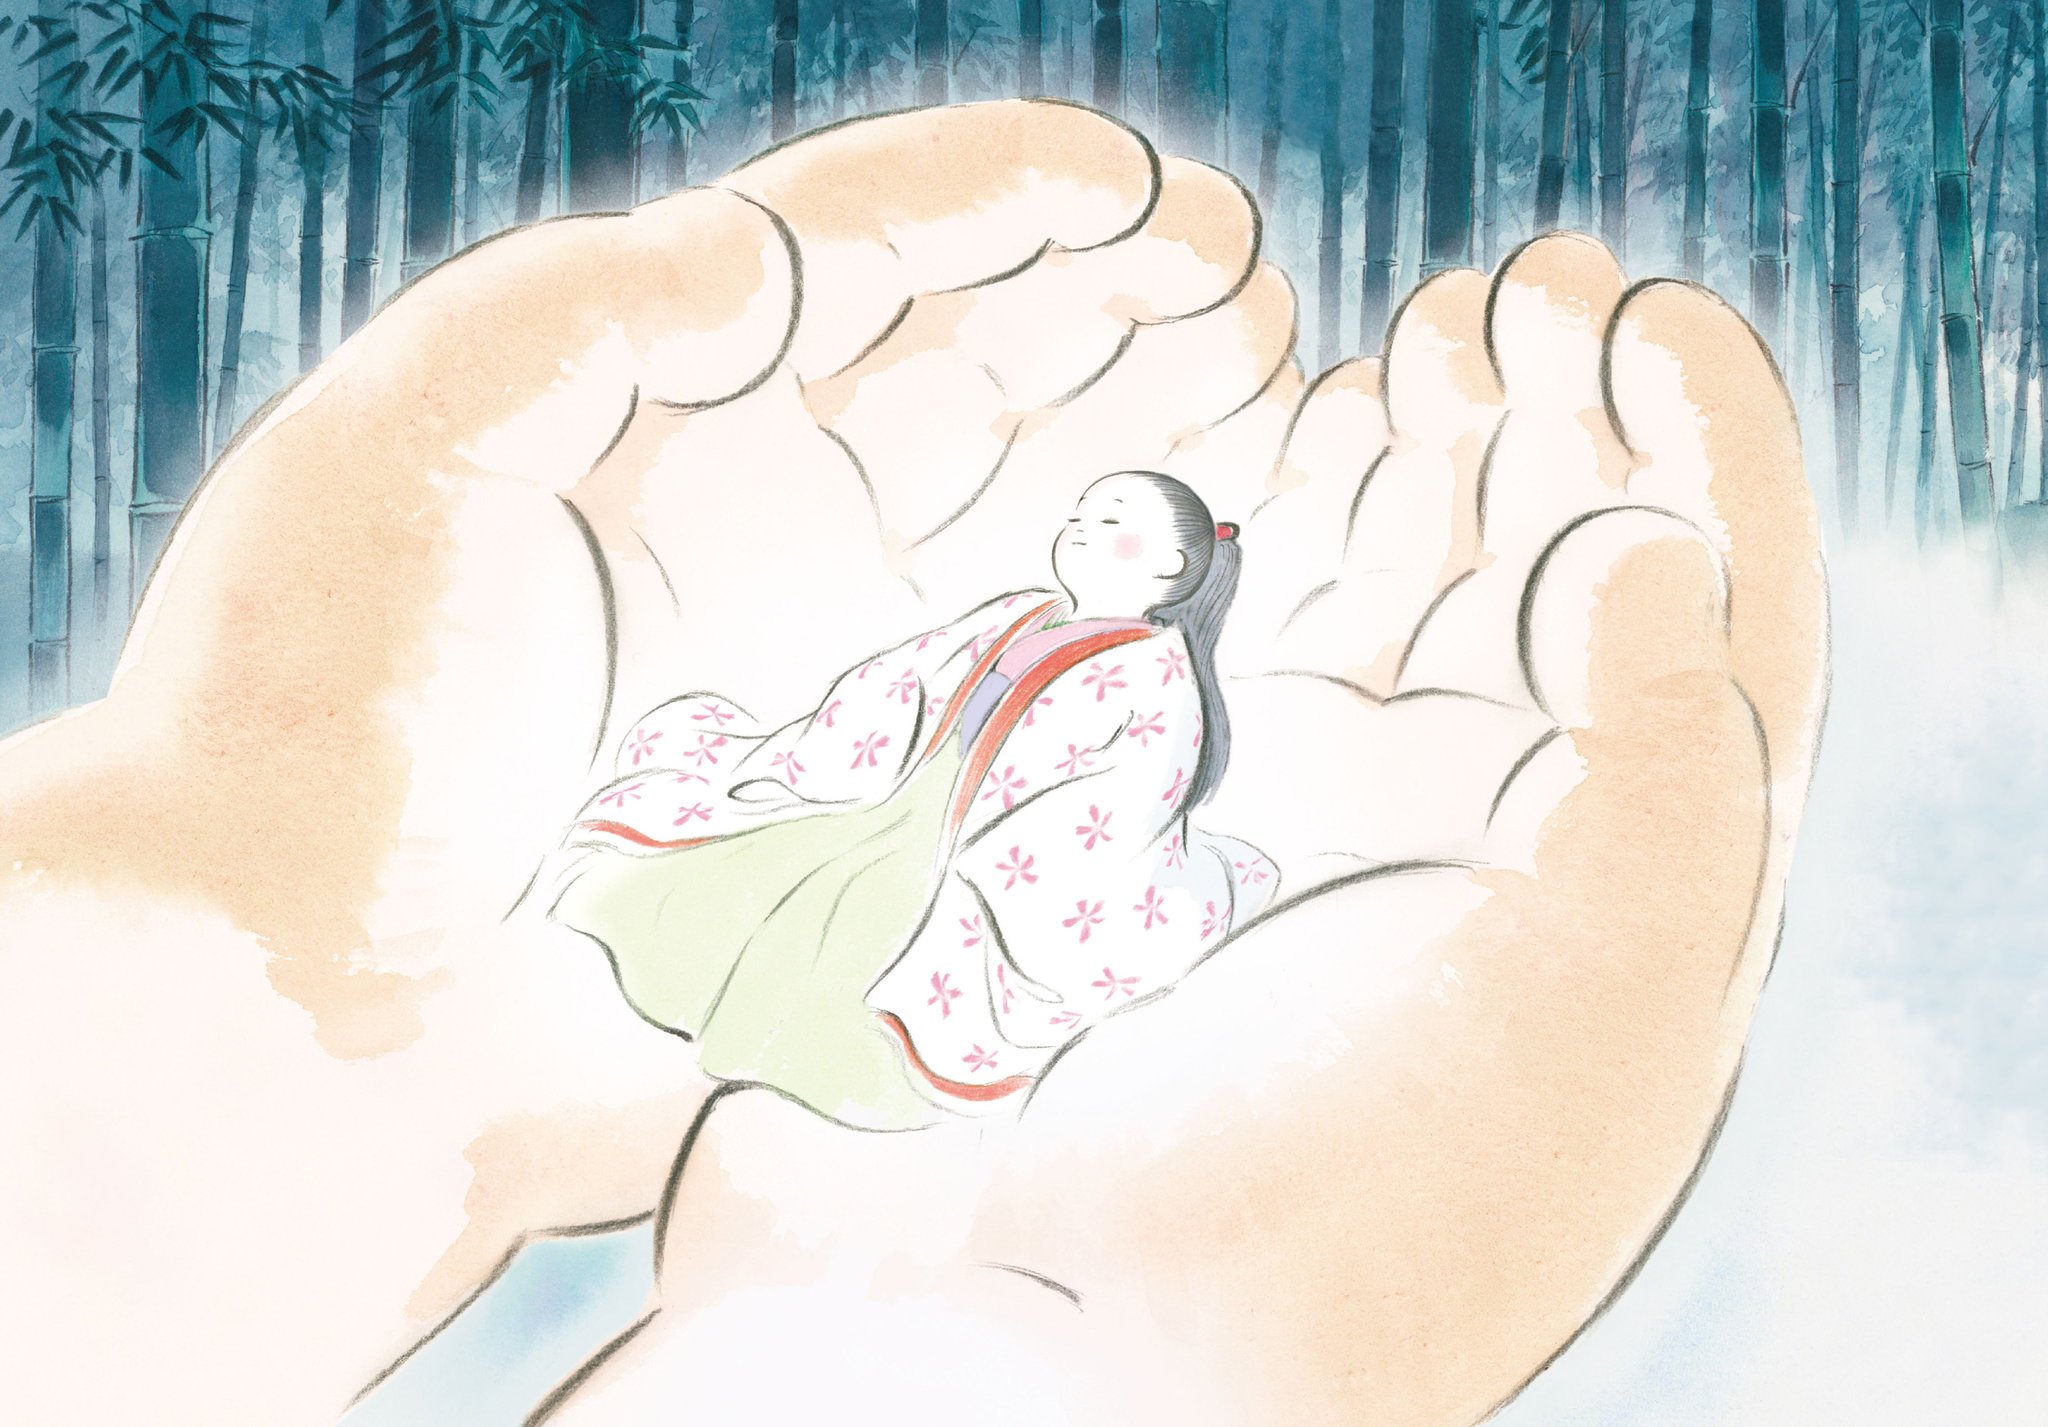 The Tale of Princess Kaguya (2013)